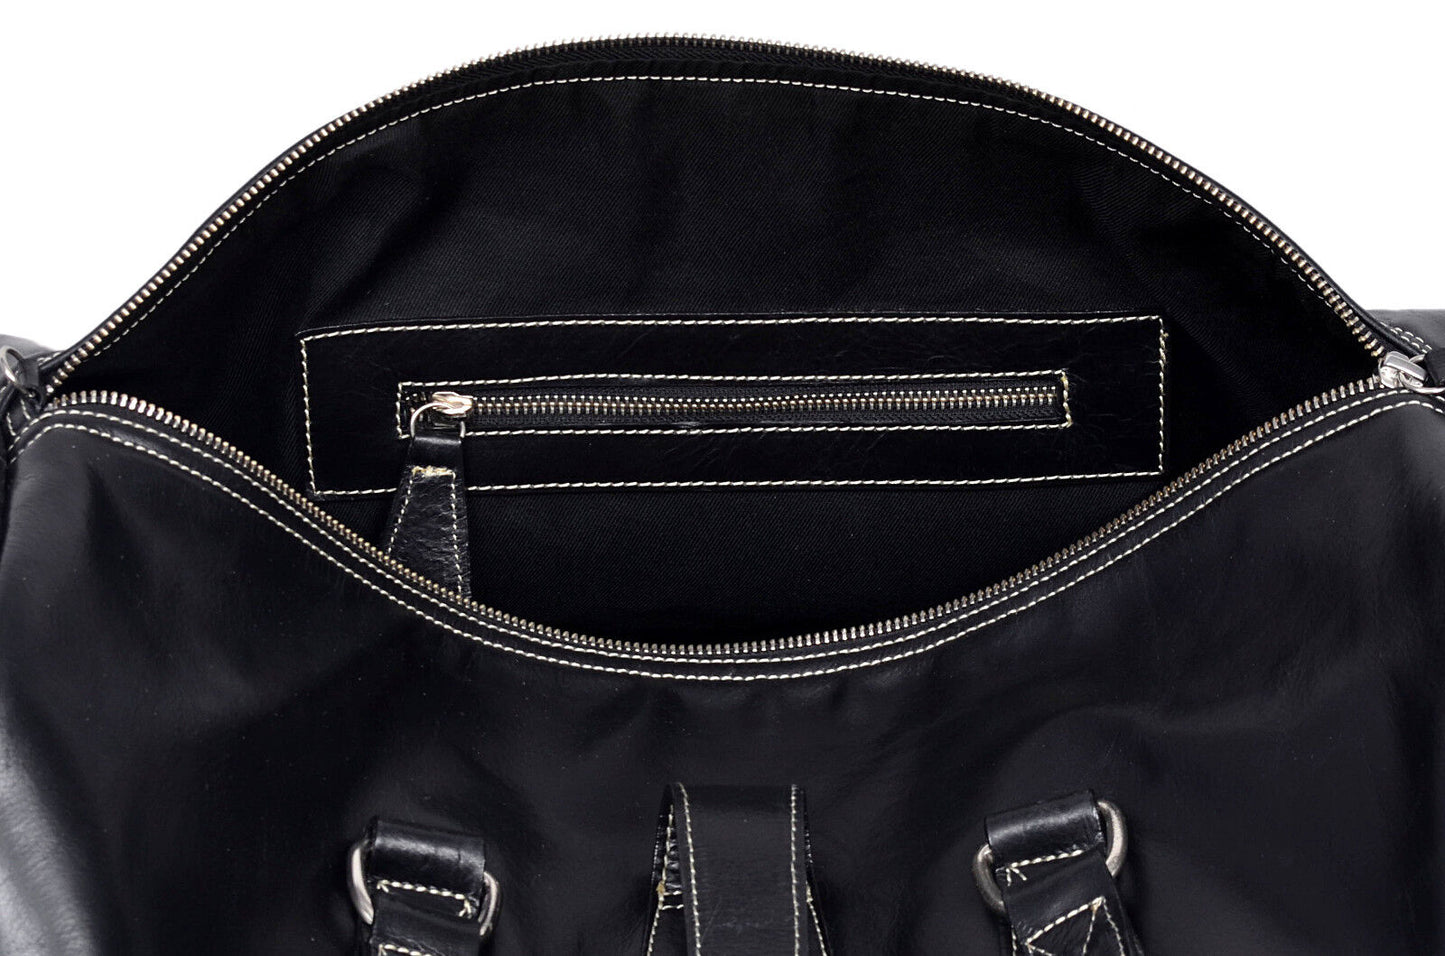 Real custom Leather Duffel Bags